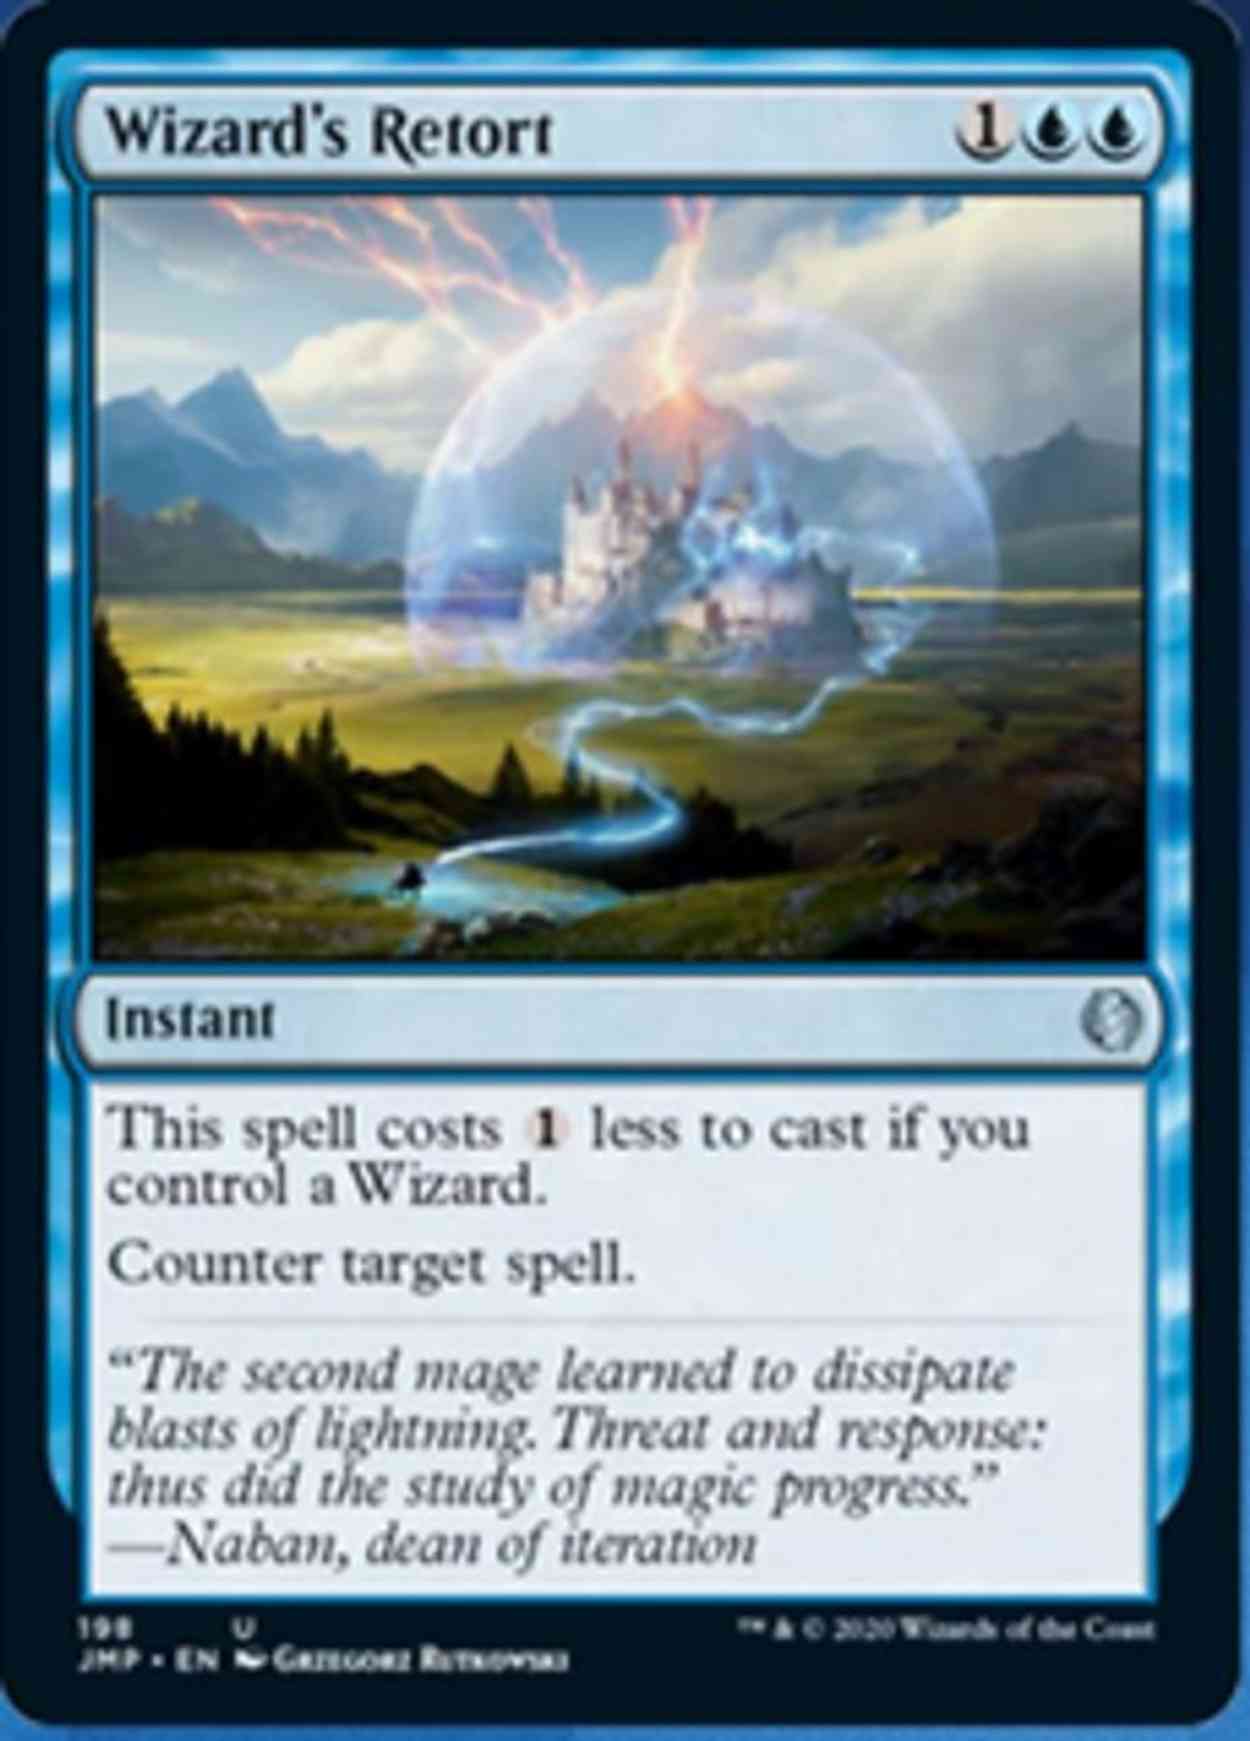 Wizard's Retort magic card front